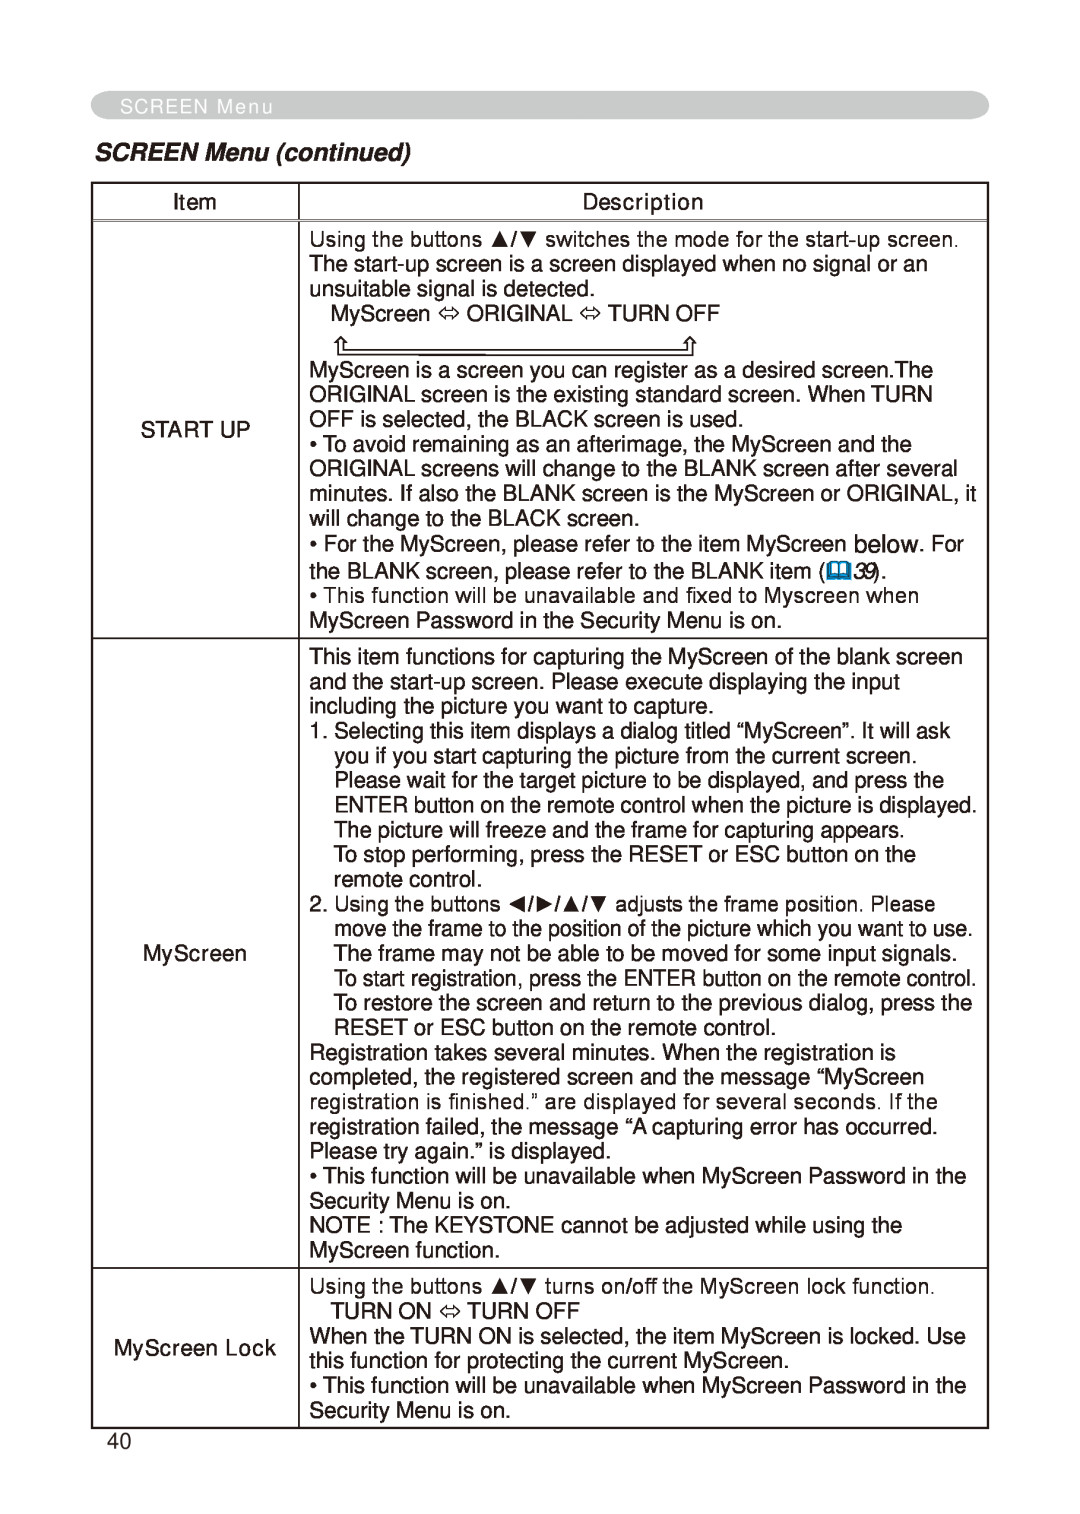 Hitachi CP-X268A user manual SCREEN Menu continued, Description, Start Up, MyScreen Lock 